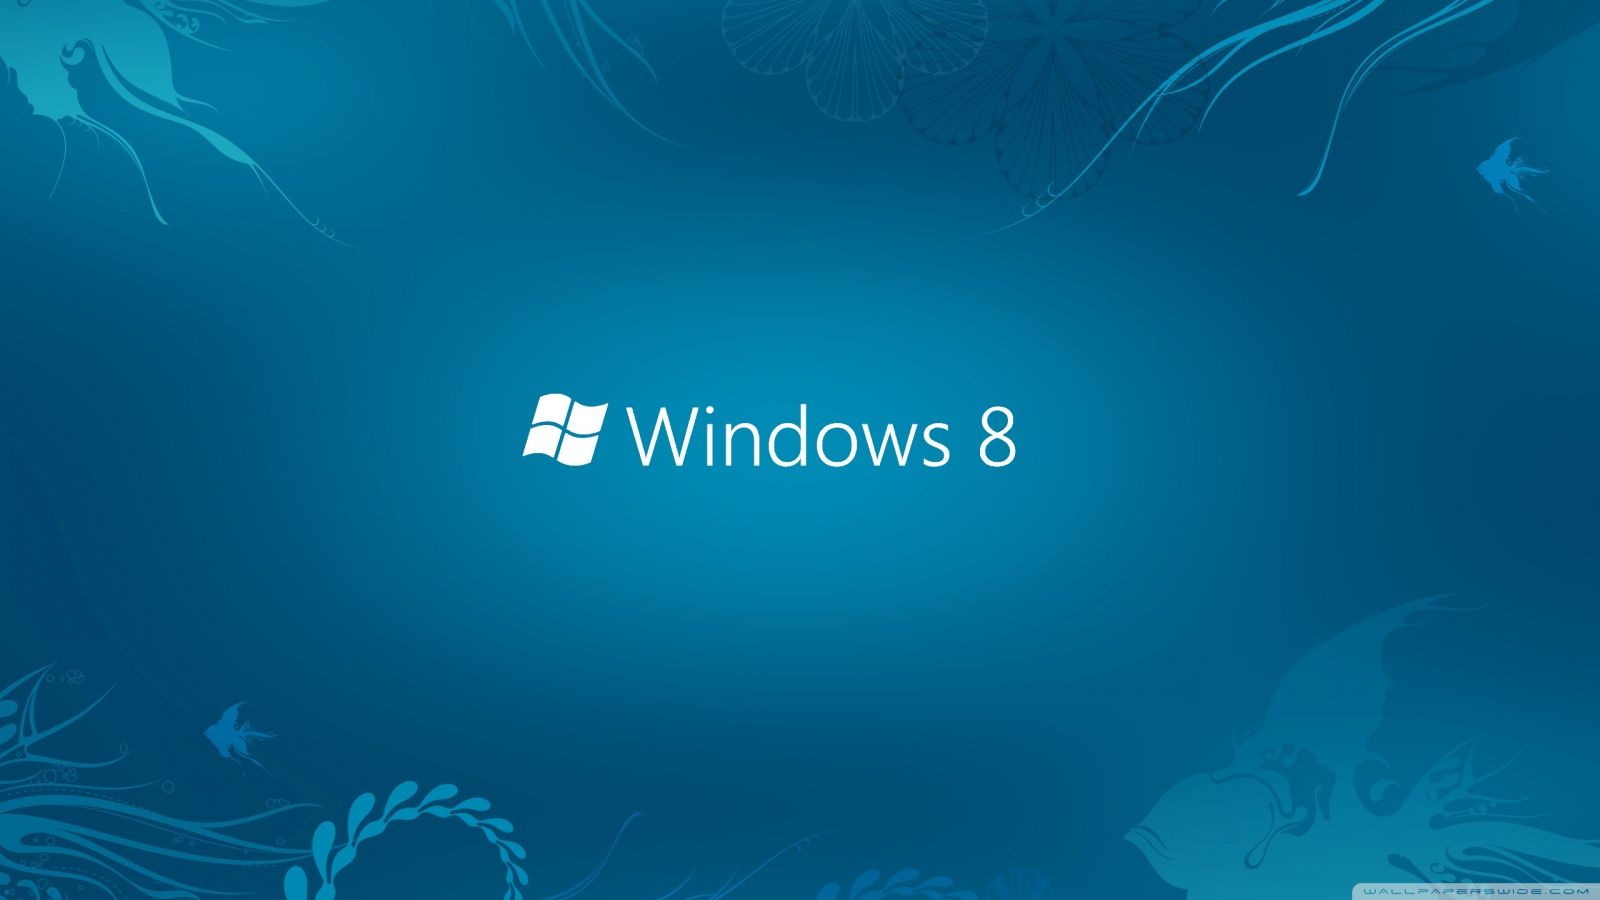 Windows 8 Wallpaper 4k - 1600x900 Wallpaper - teahub.io